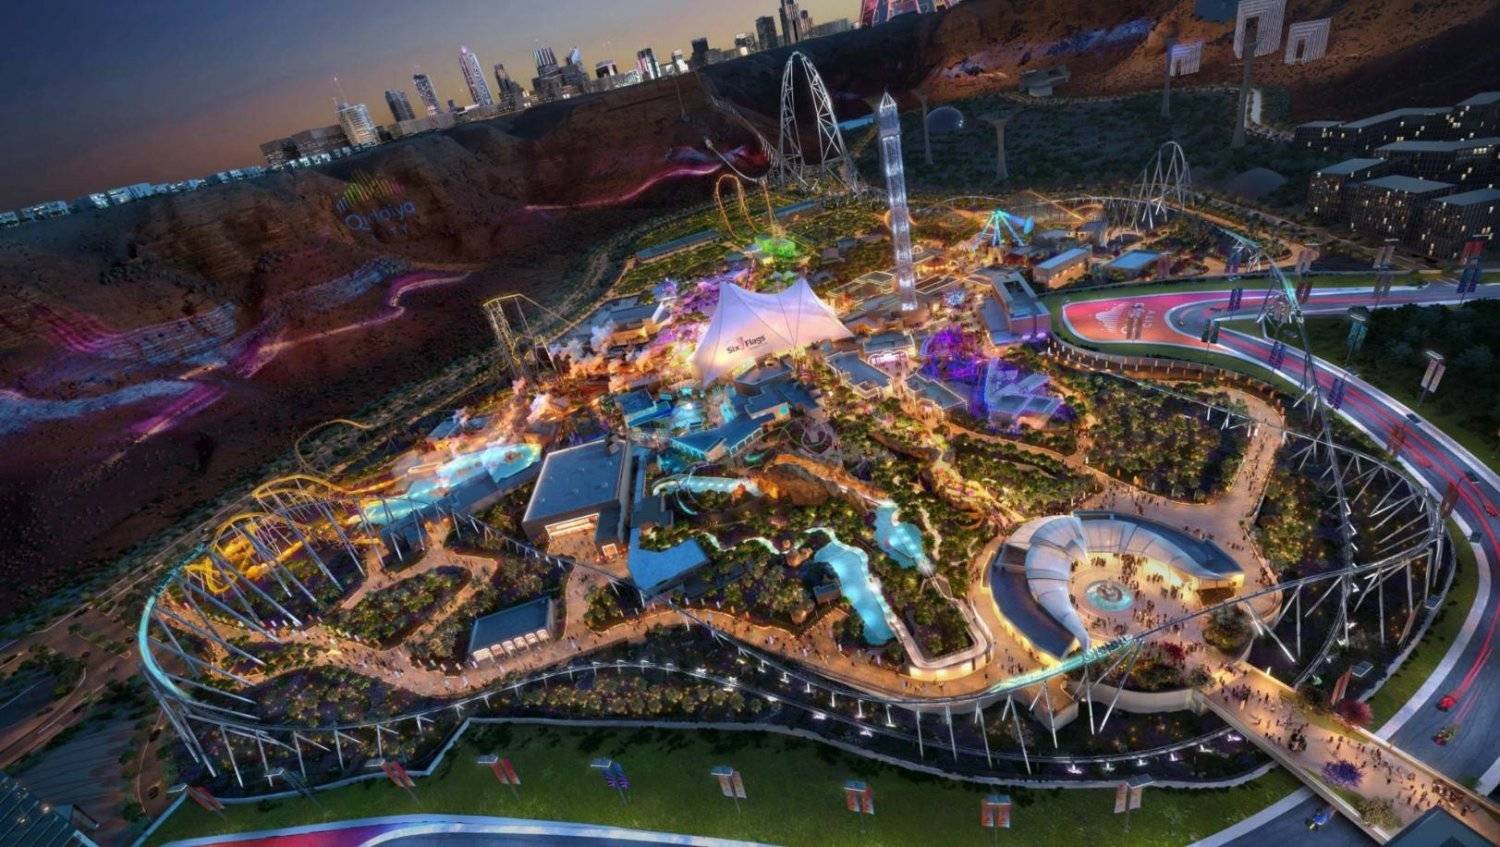 Located in Qiddiya City, Aquarabia will complement Six Flags Qiddiya City, the city's flagship theme park. SPA